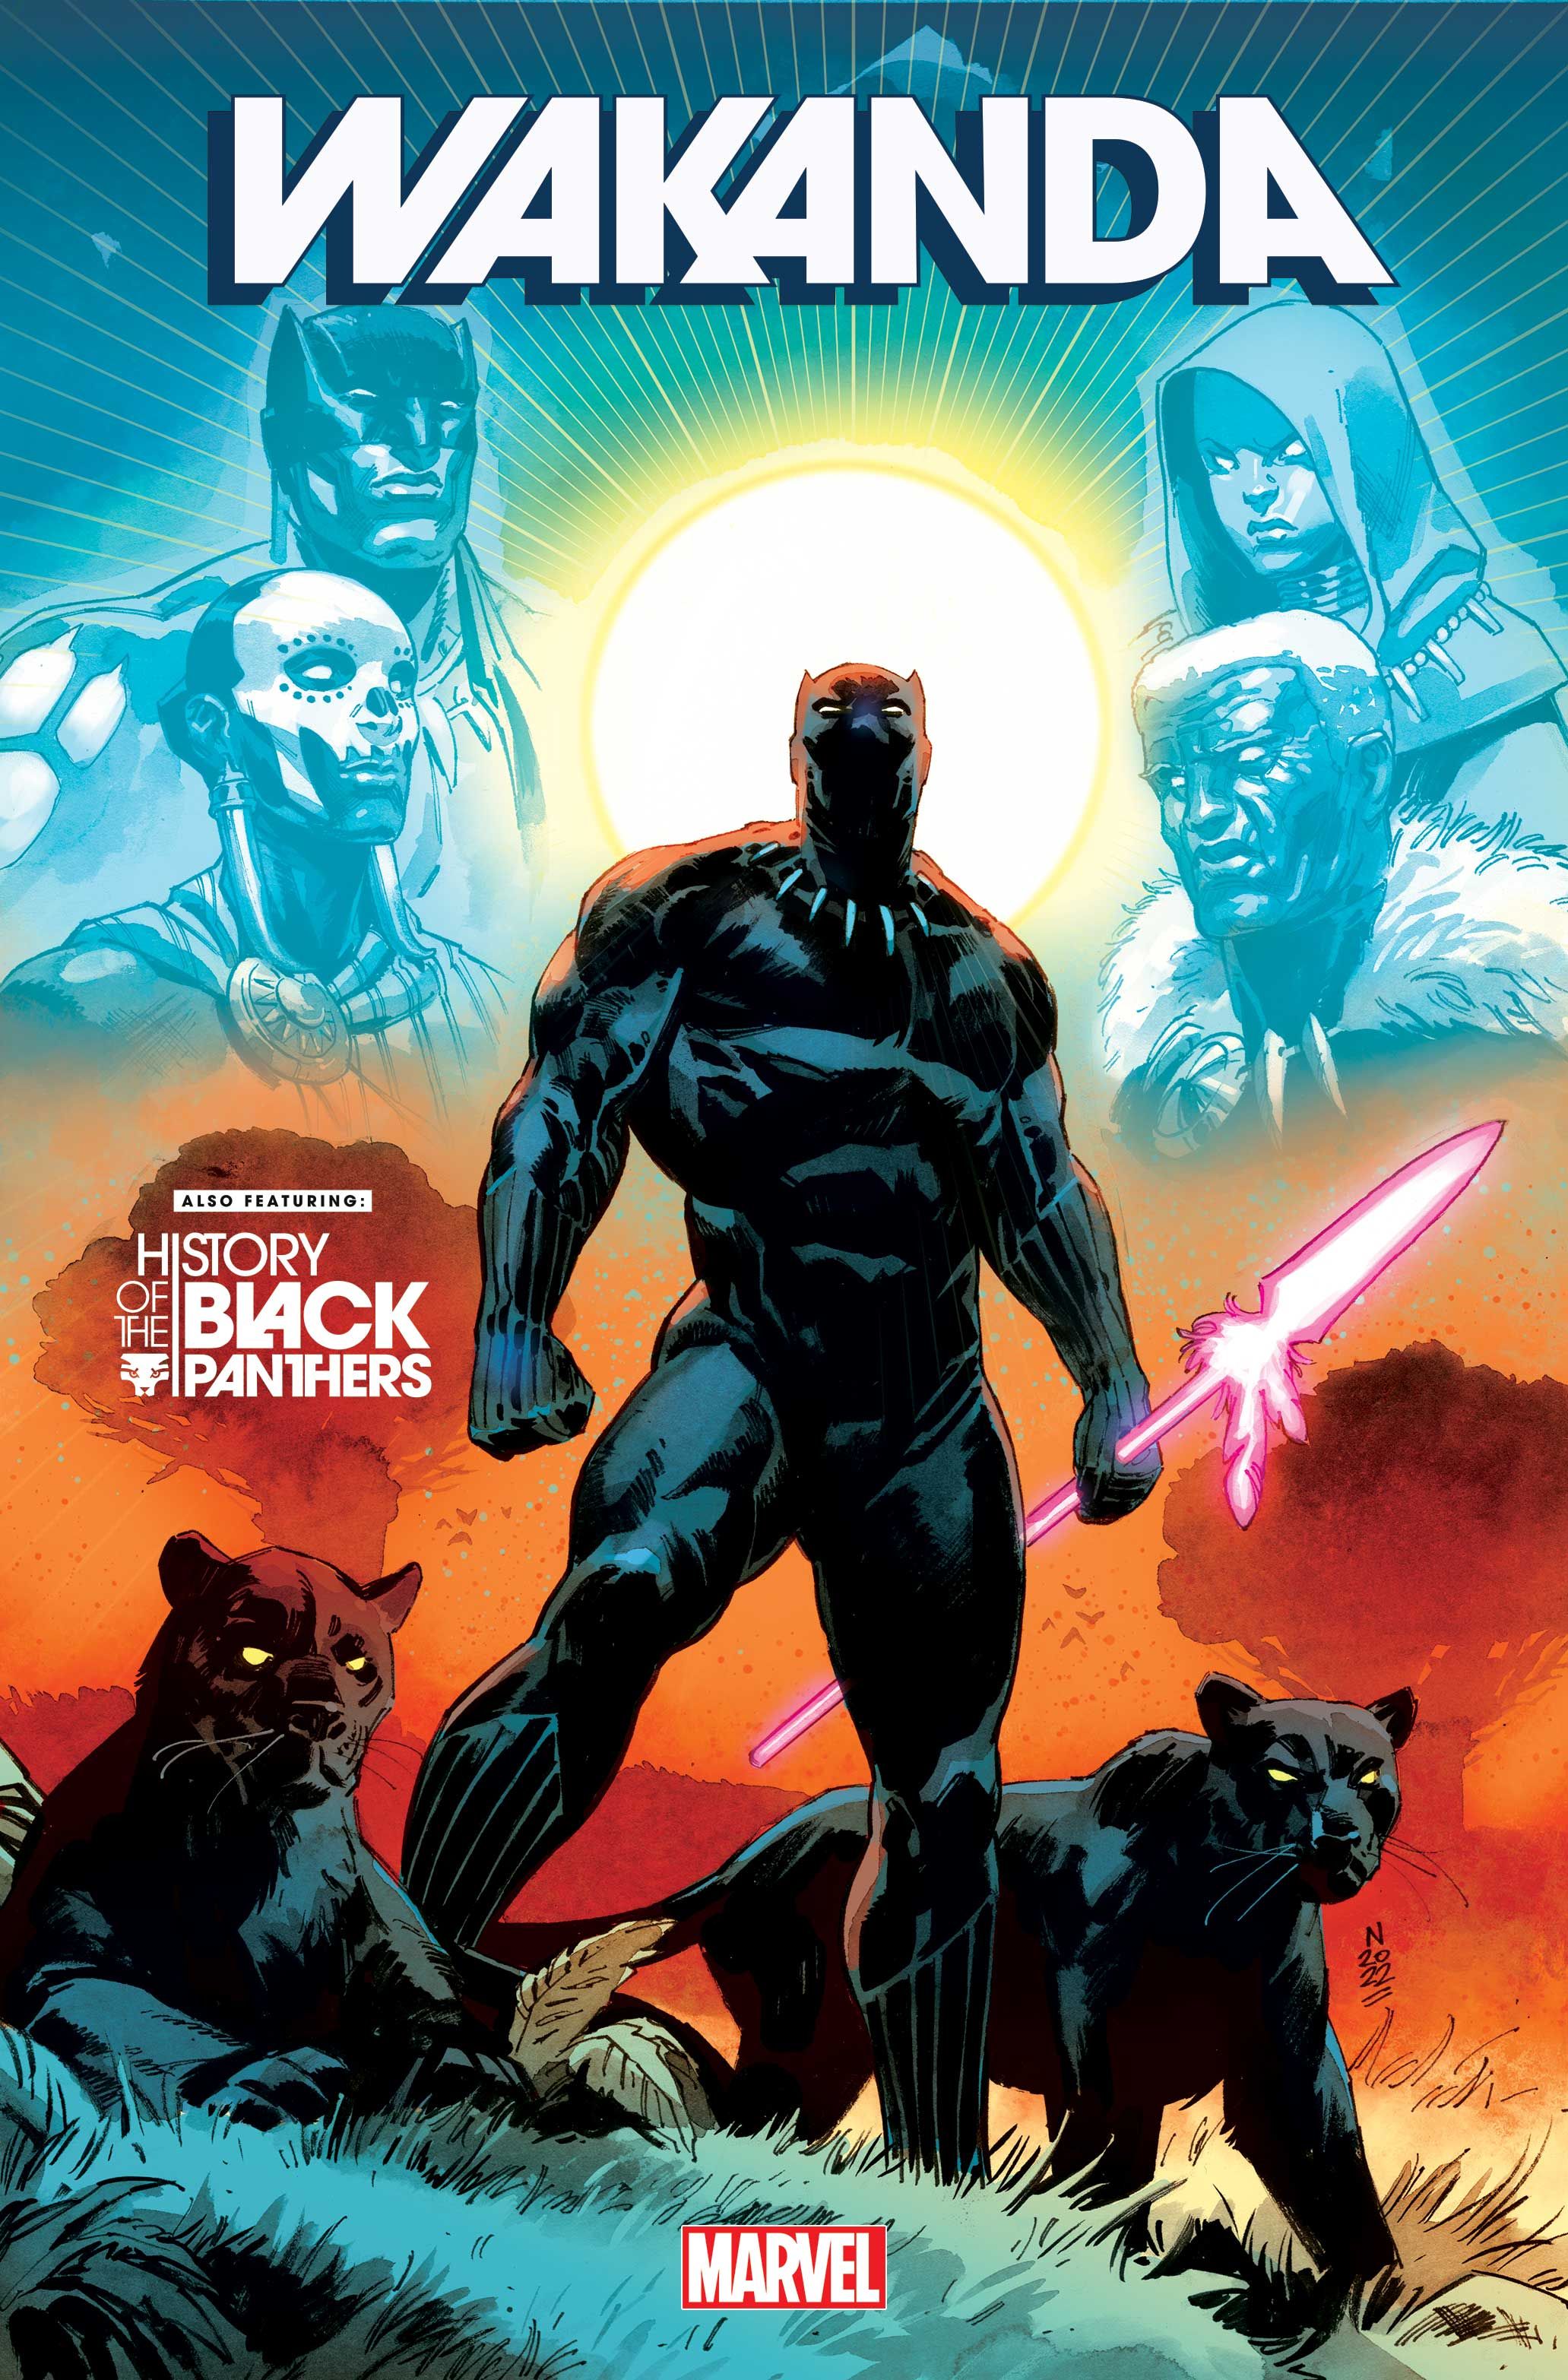 Black Panther's Shuri And Killmonger Star in Marvel's New Wakanda Series